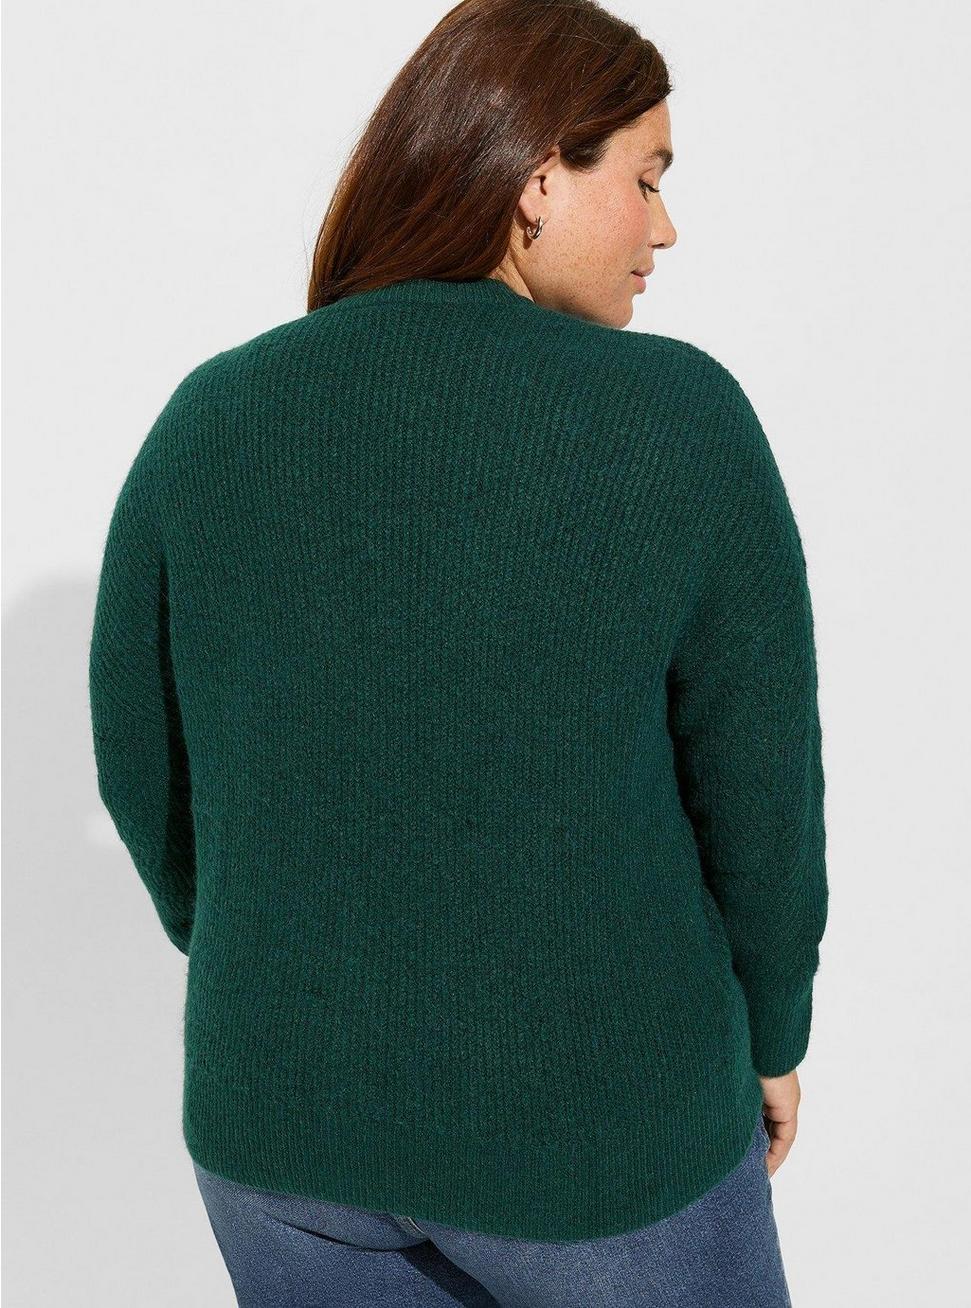 Vegan Cashmere Cardigan Sweater, BOTANICAL GARDEN, alternate